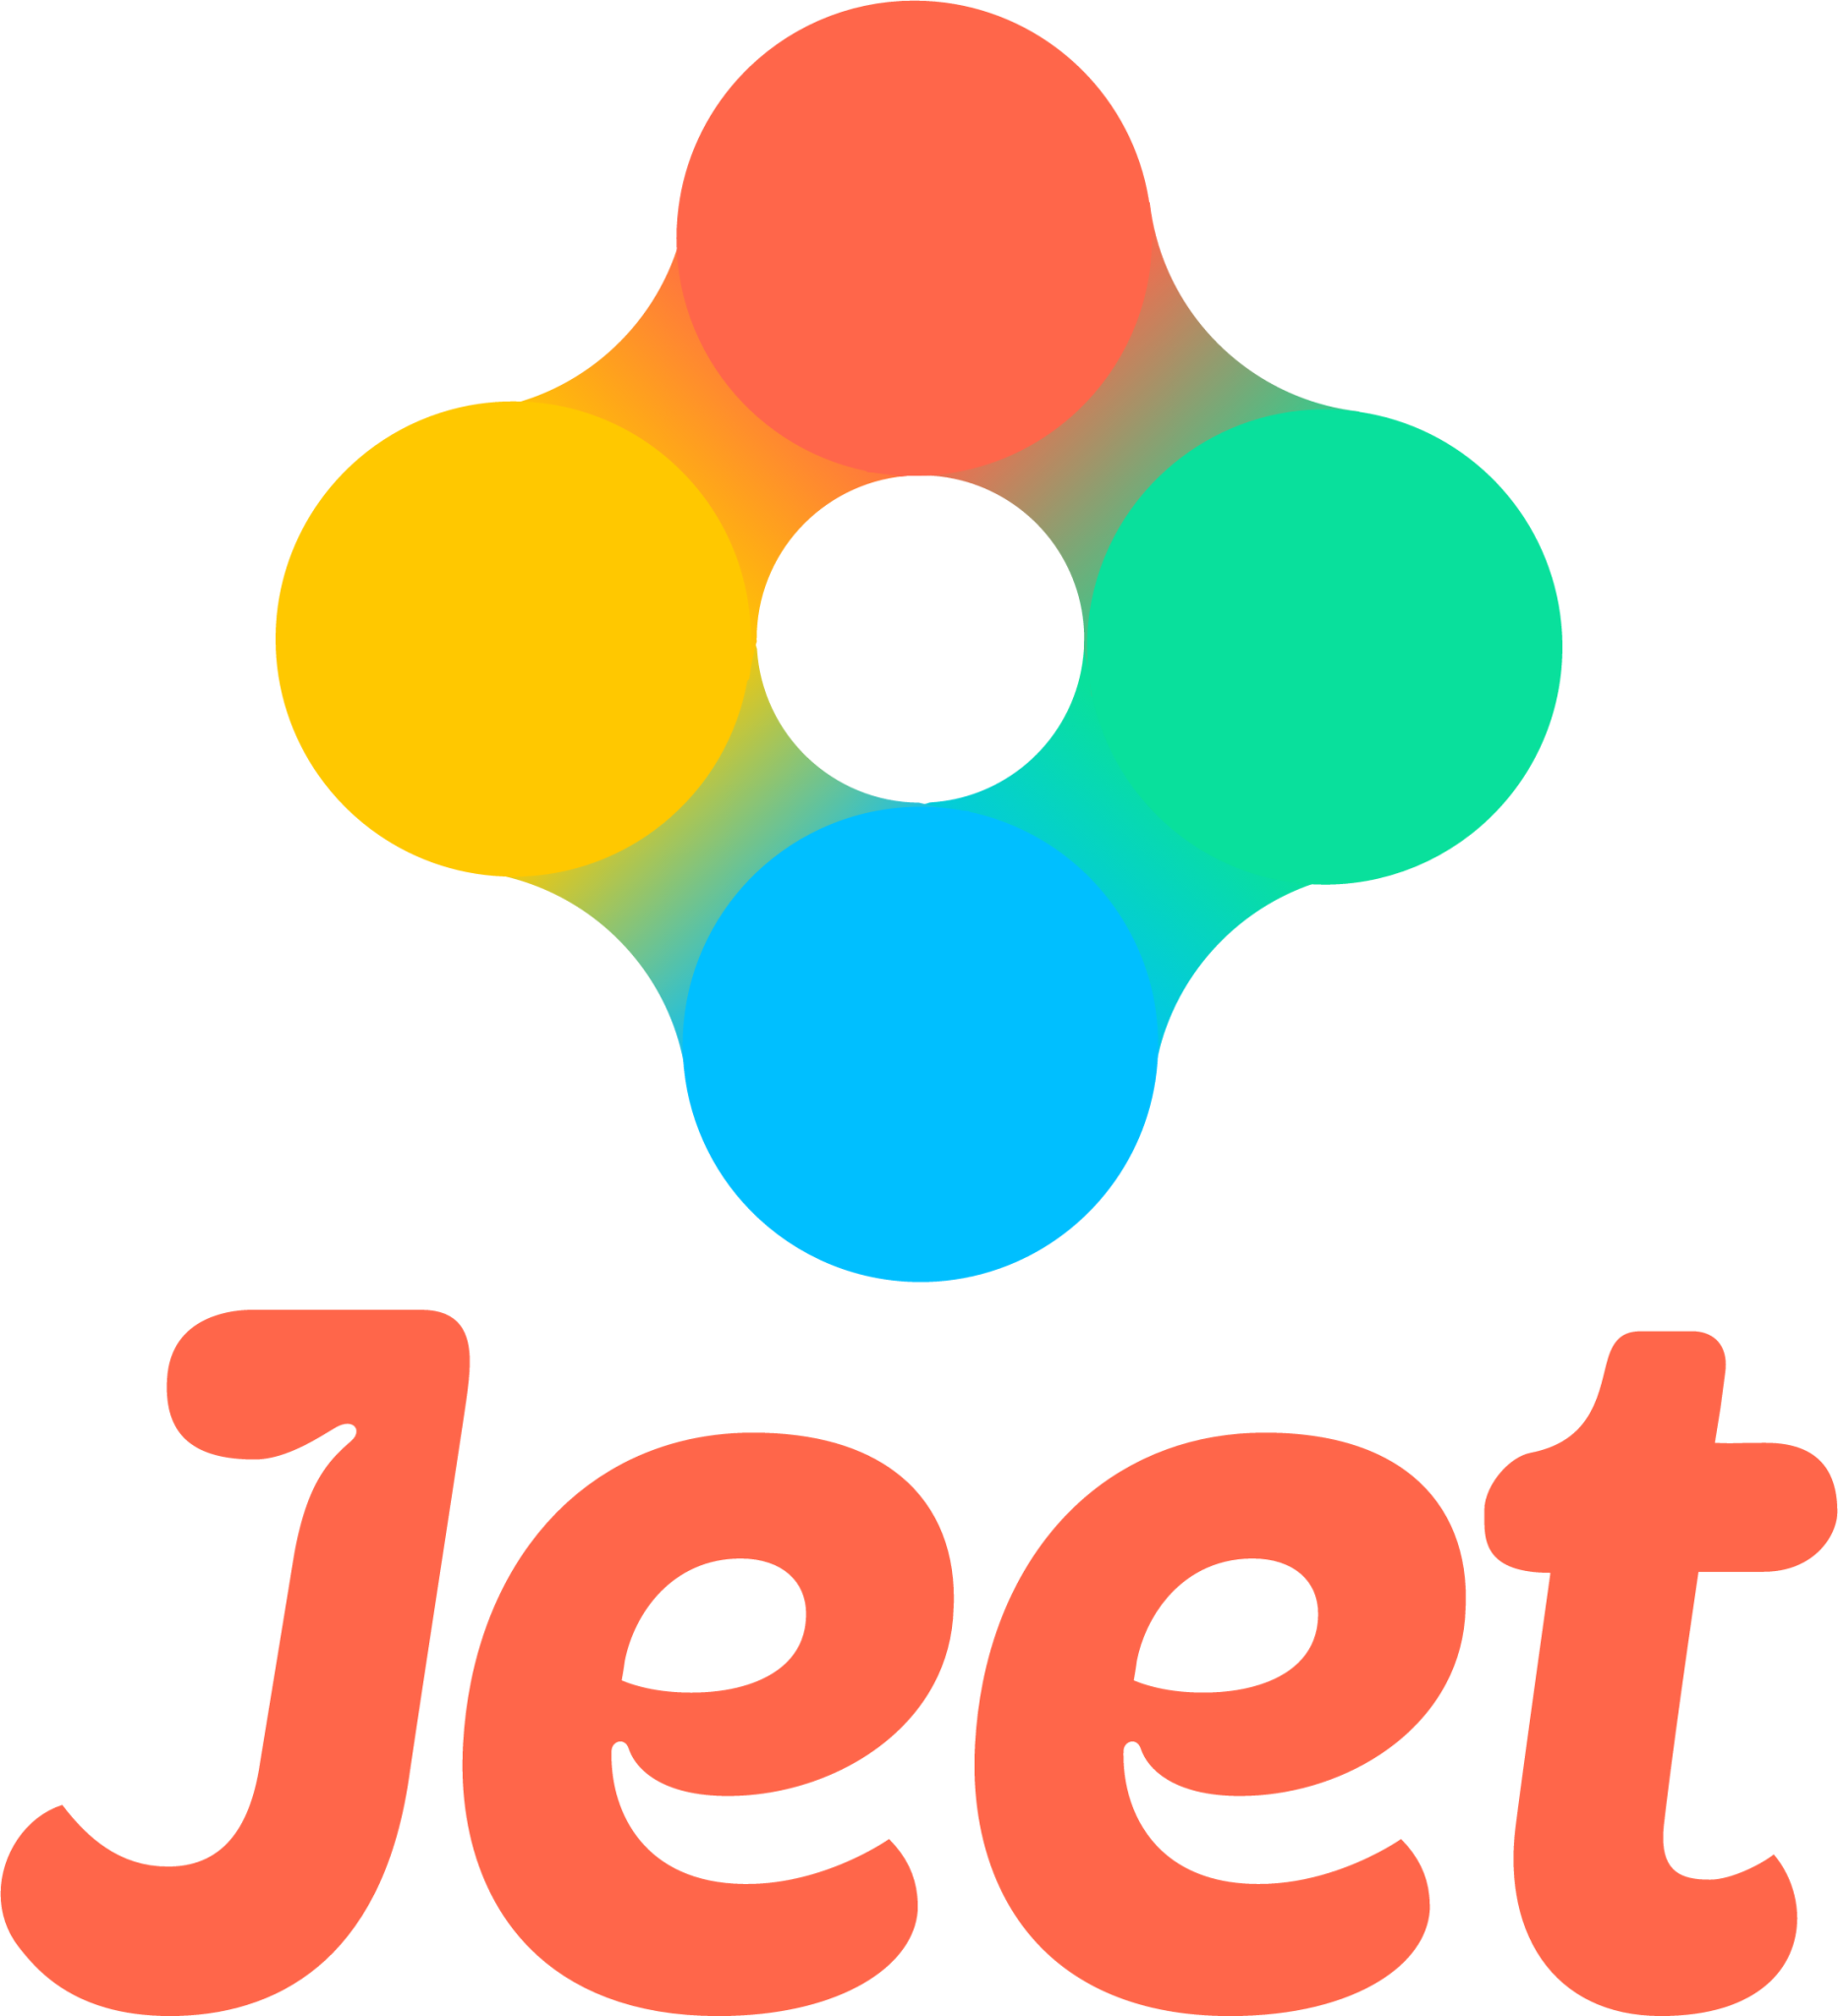 jeet original wordmark icon